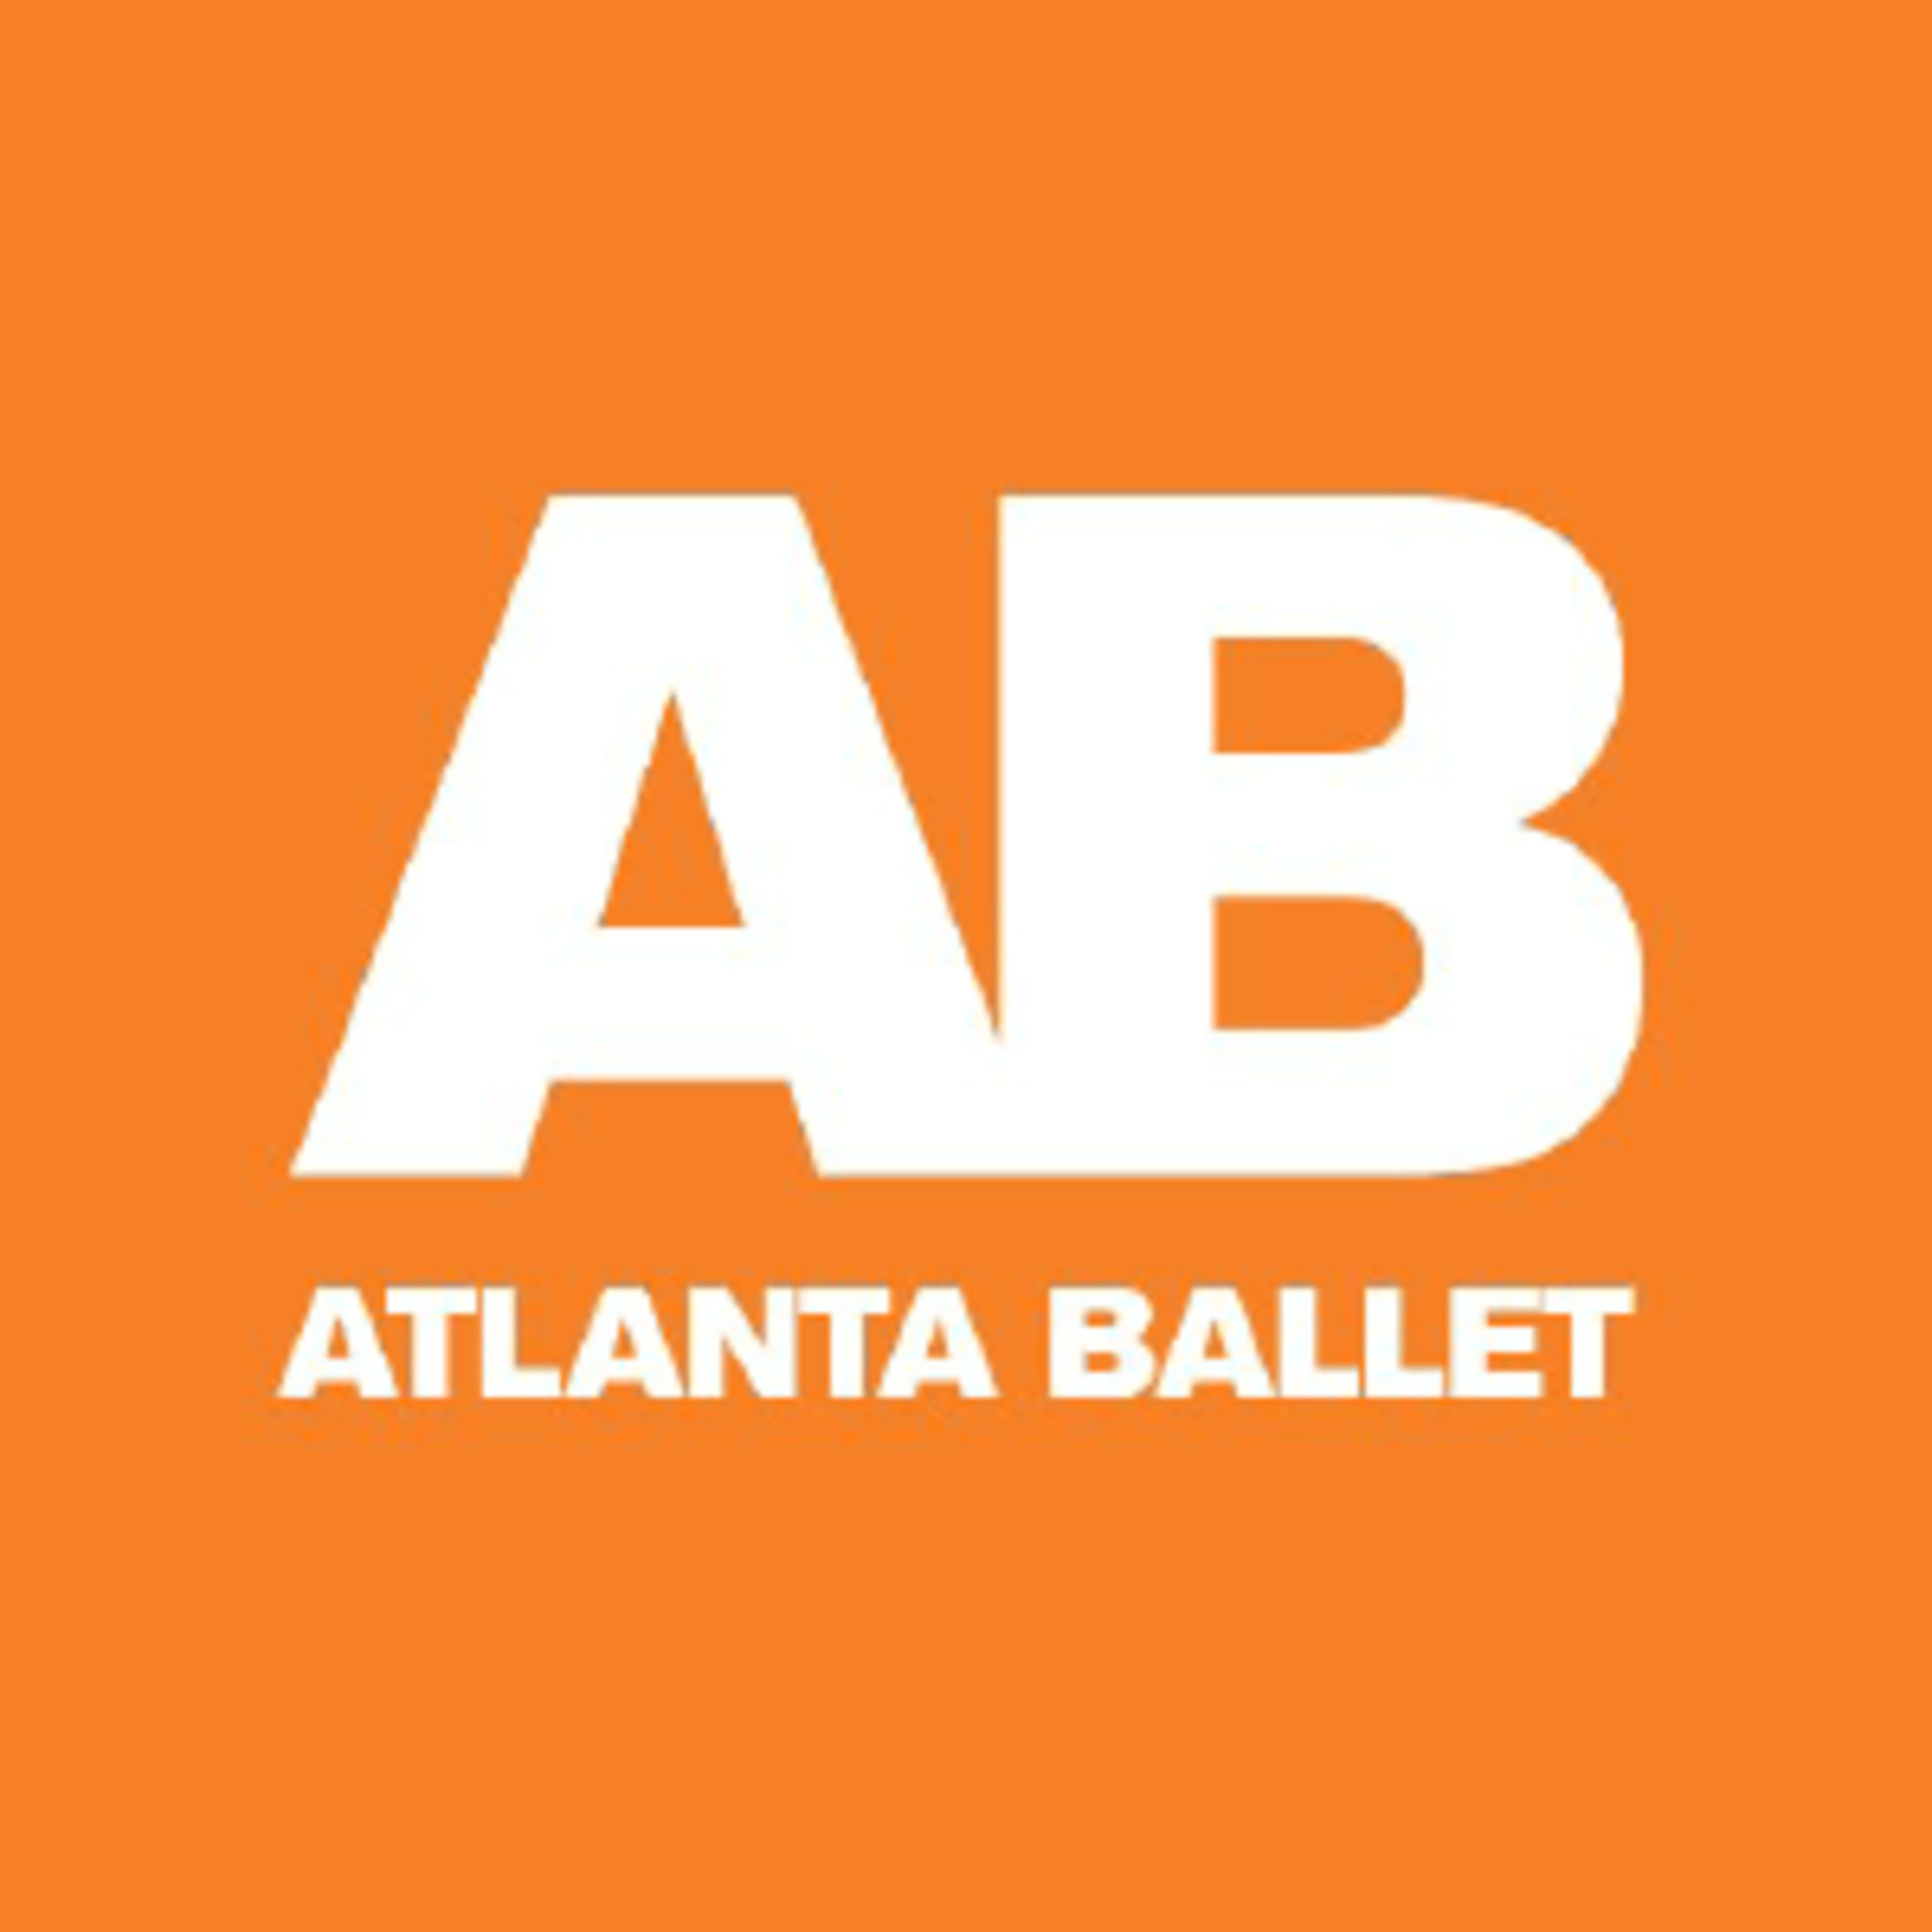 Atlanta BalletCode